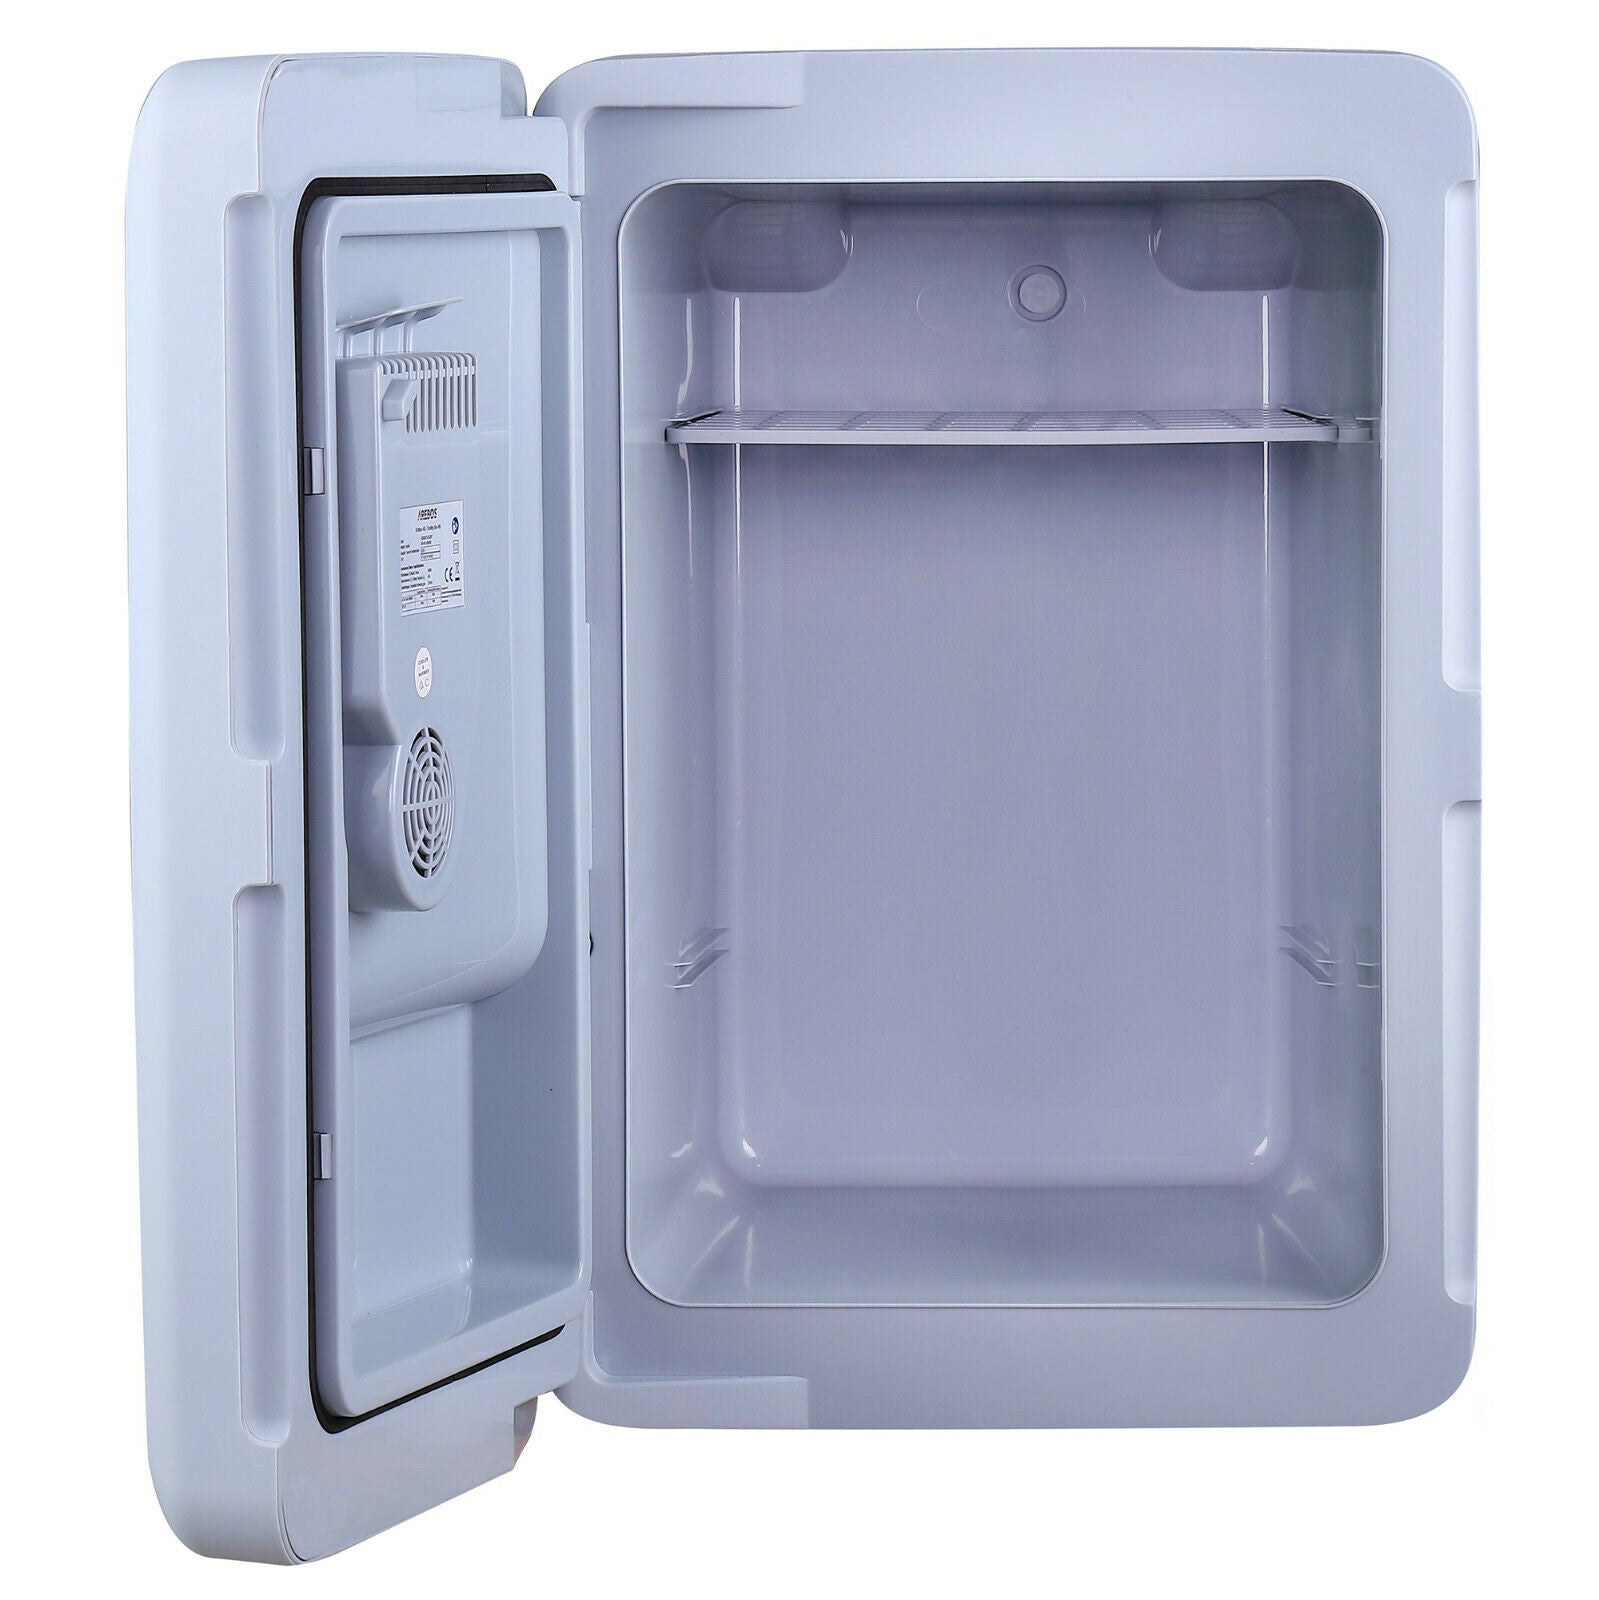 China 12-Volt-Autokühlschrank Lieferanten, Hersteller - Direkter